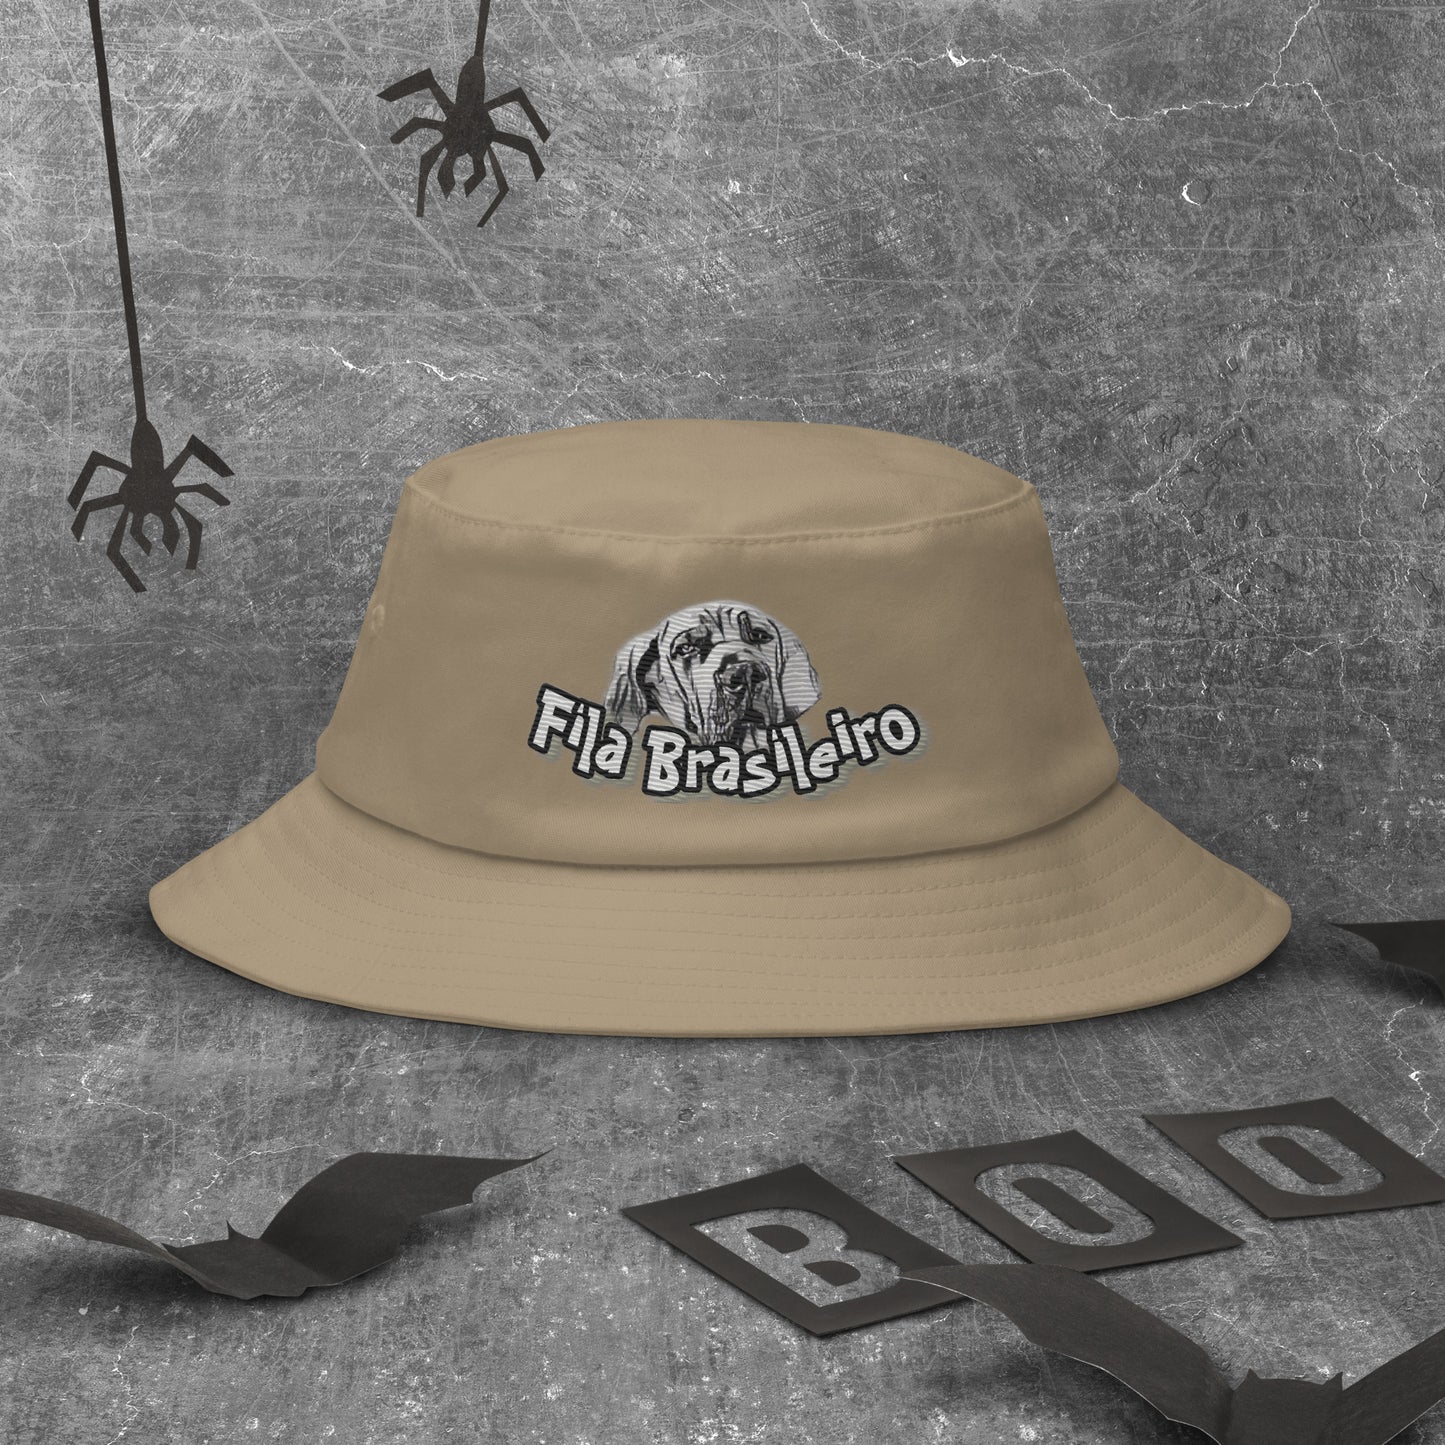 Fila Brasileiro - Old School Bucket Hat